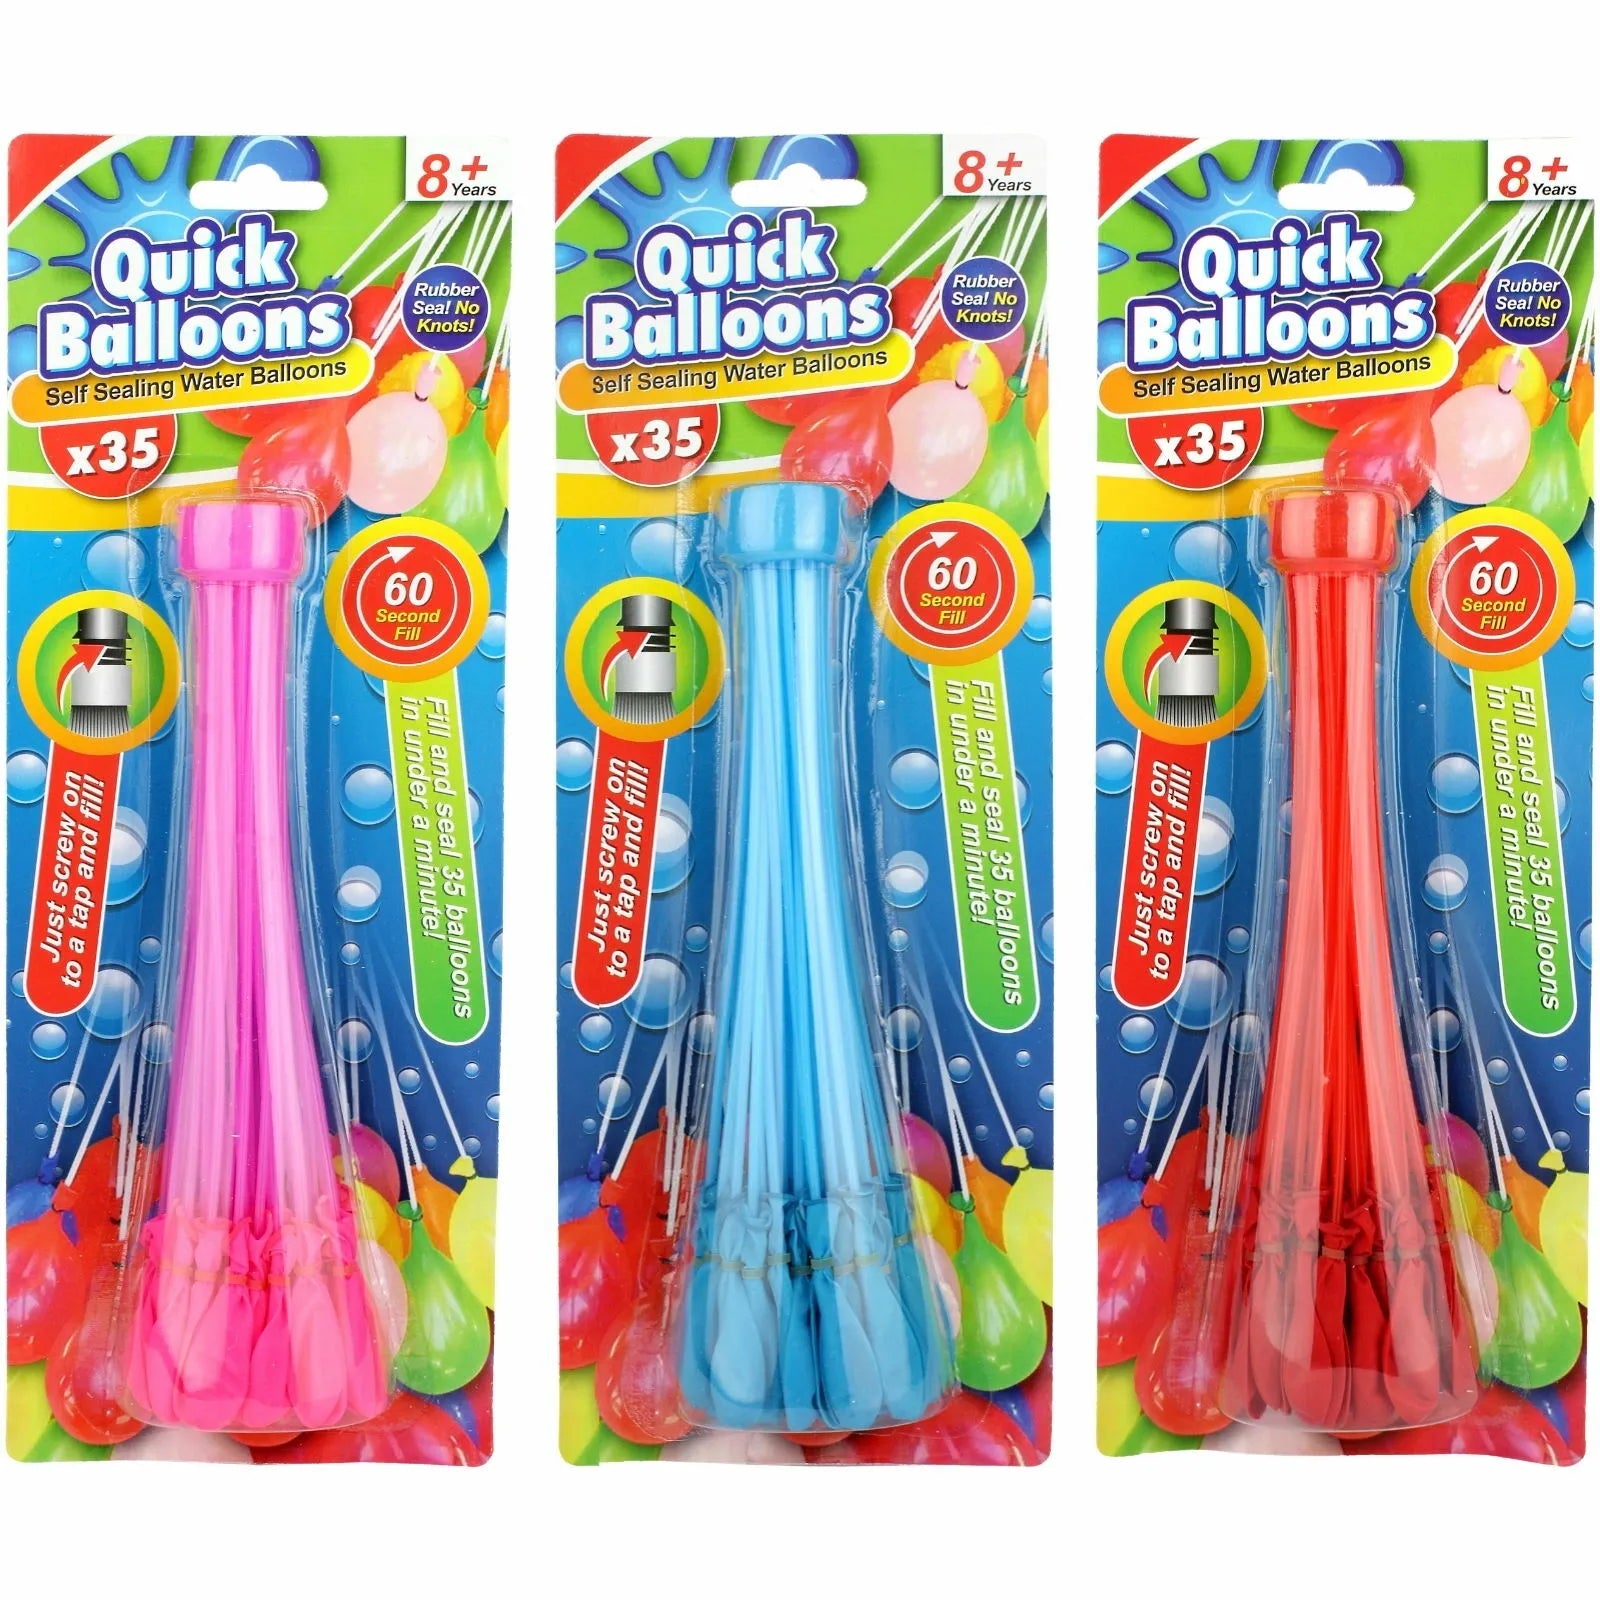 Quick Balloons - Self Sealing Water Balloons